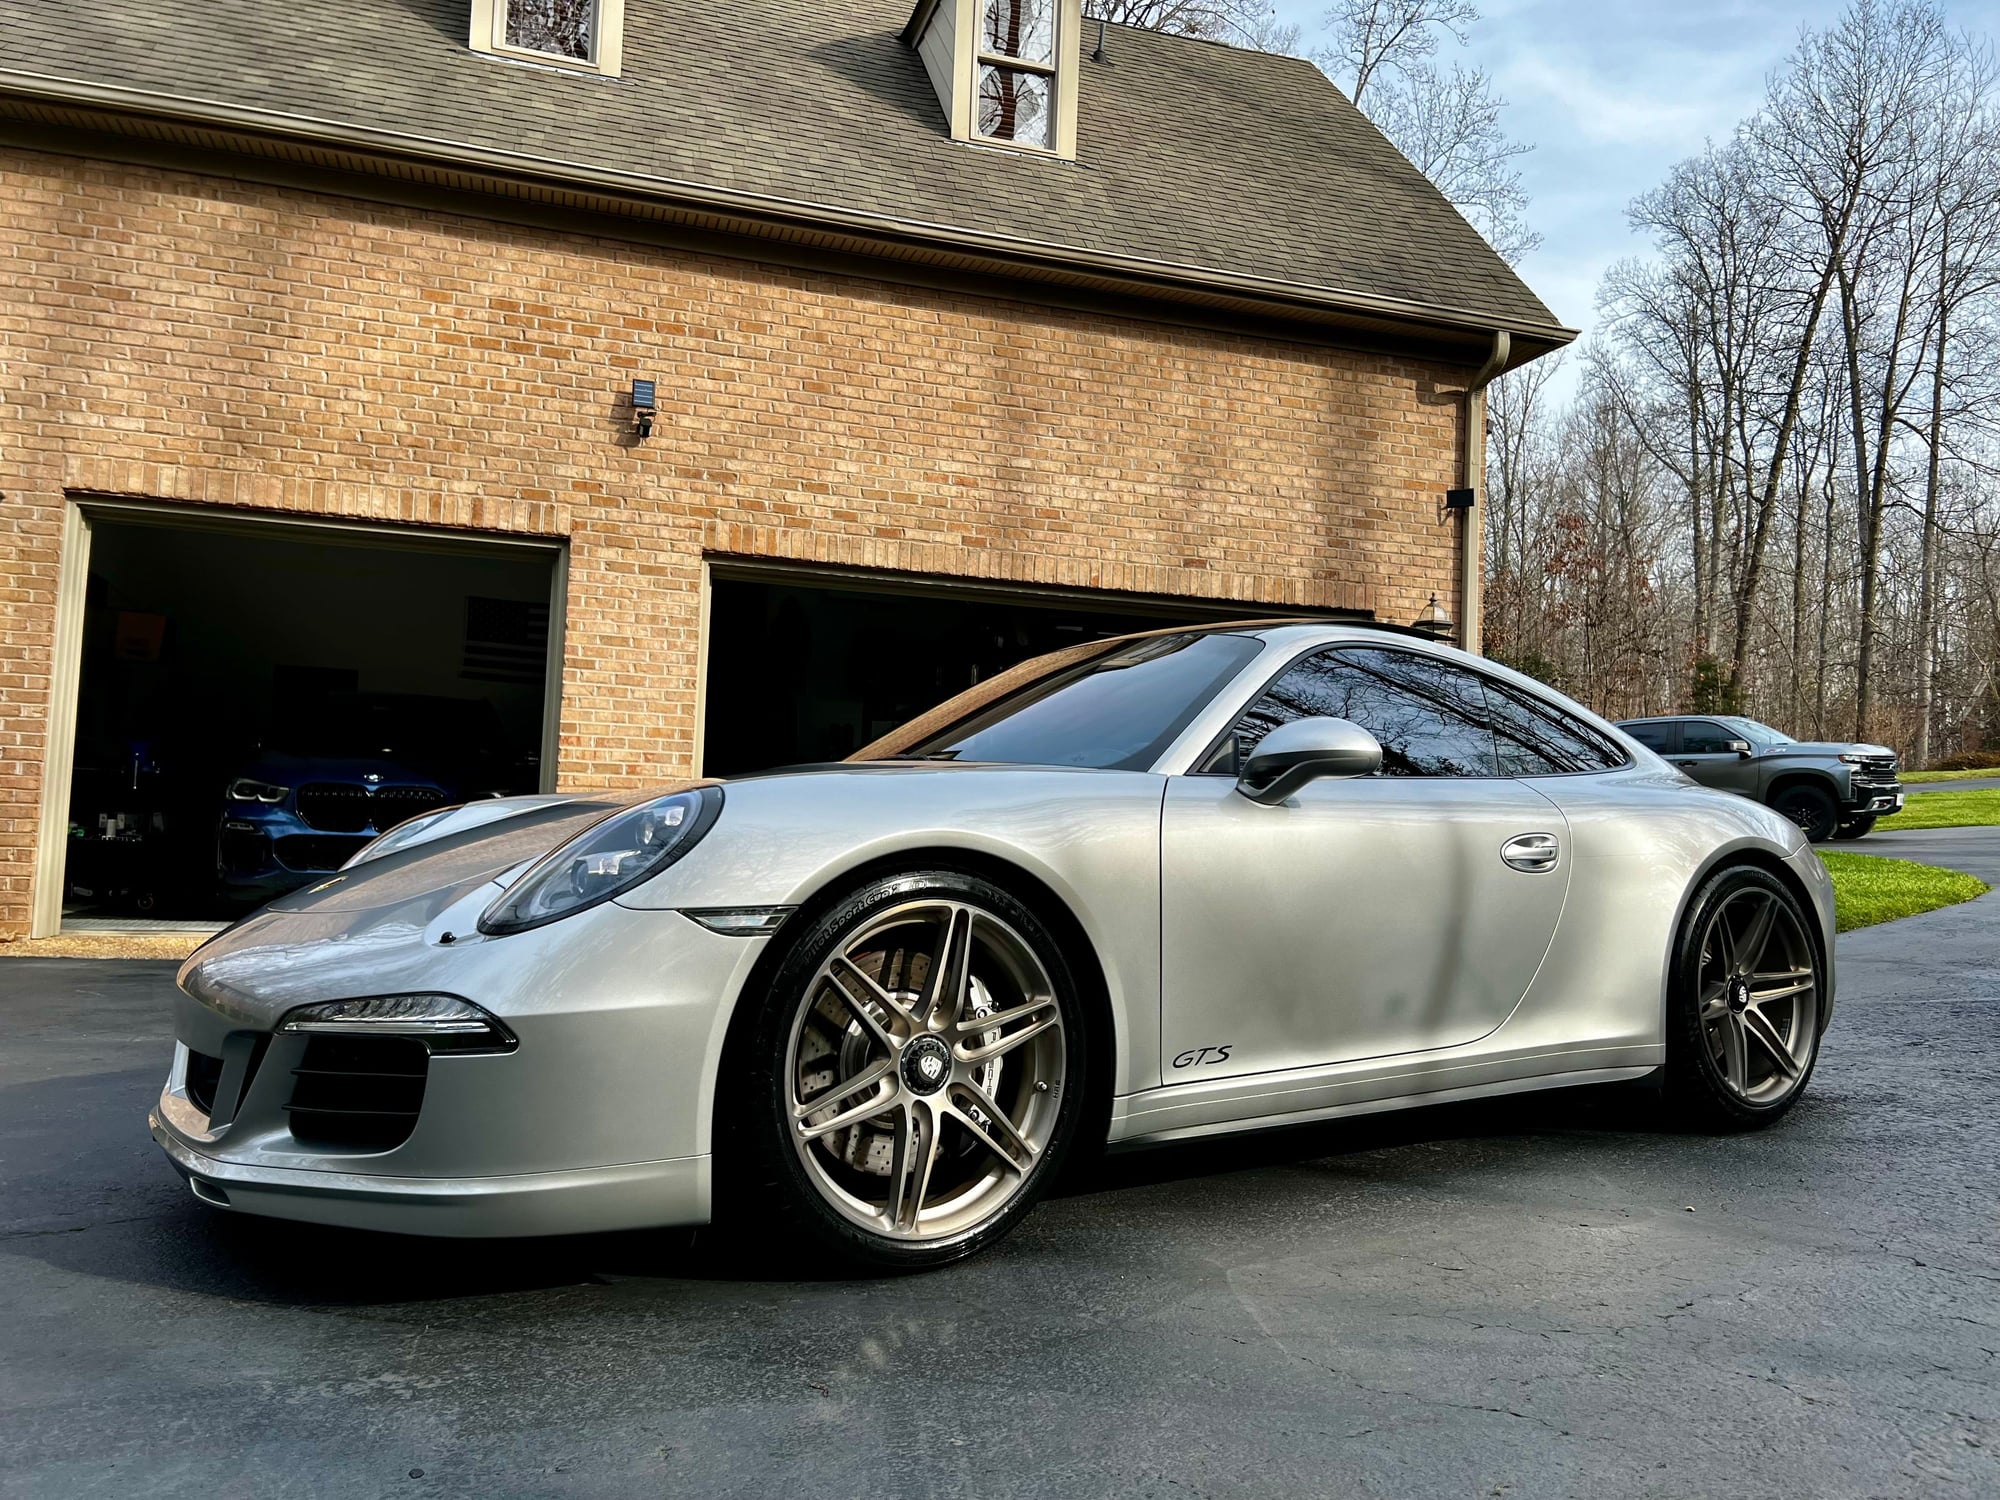 2015 Porsche 911 - F/S 2015 911.1 Carrera 4 GTS, High MSRP, $157k, low miles. - Used - Rockville, VA 23146, United States